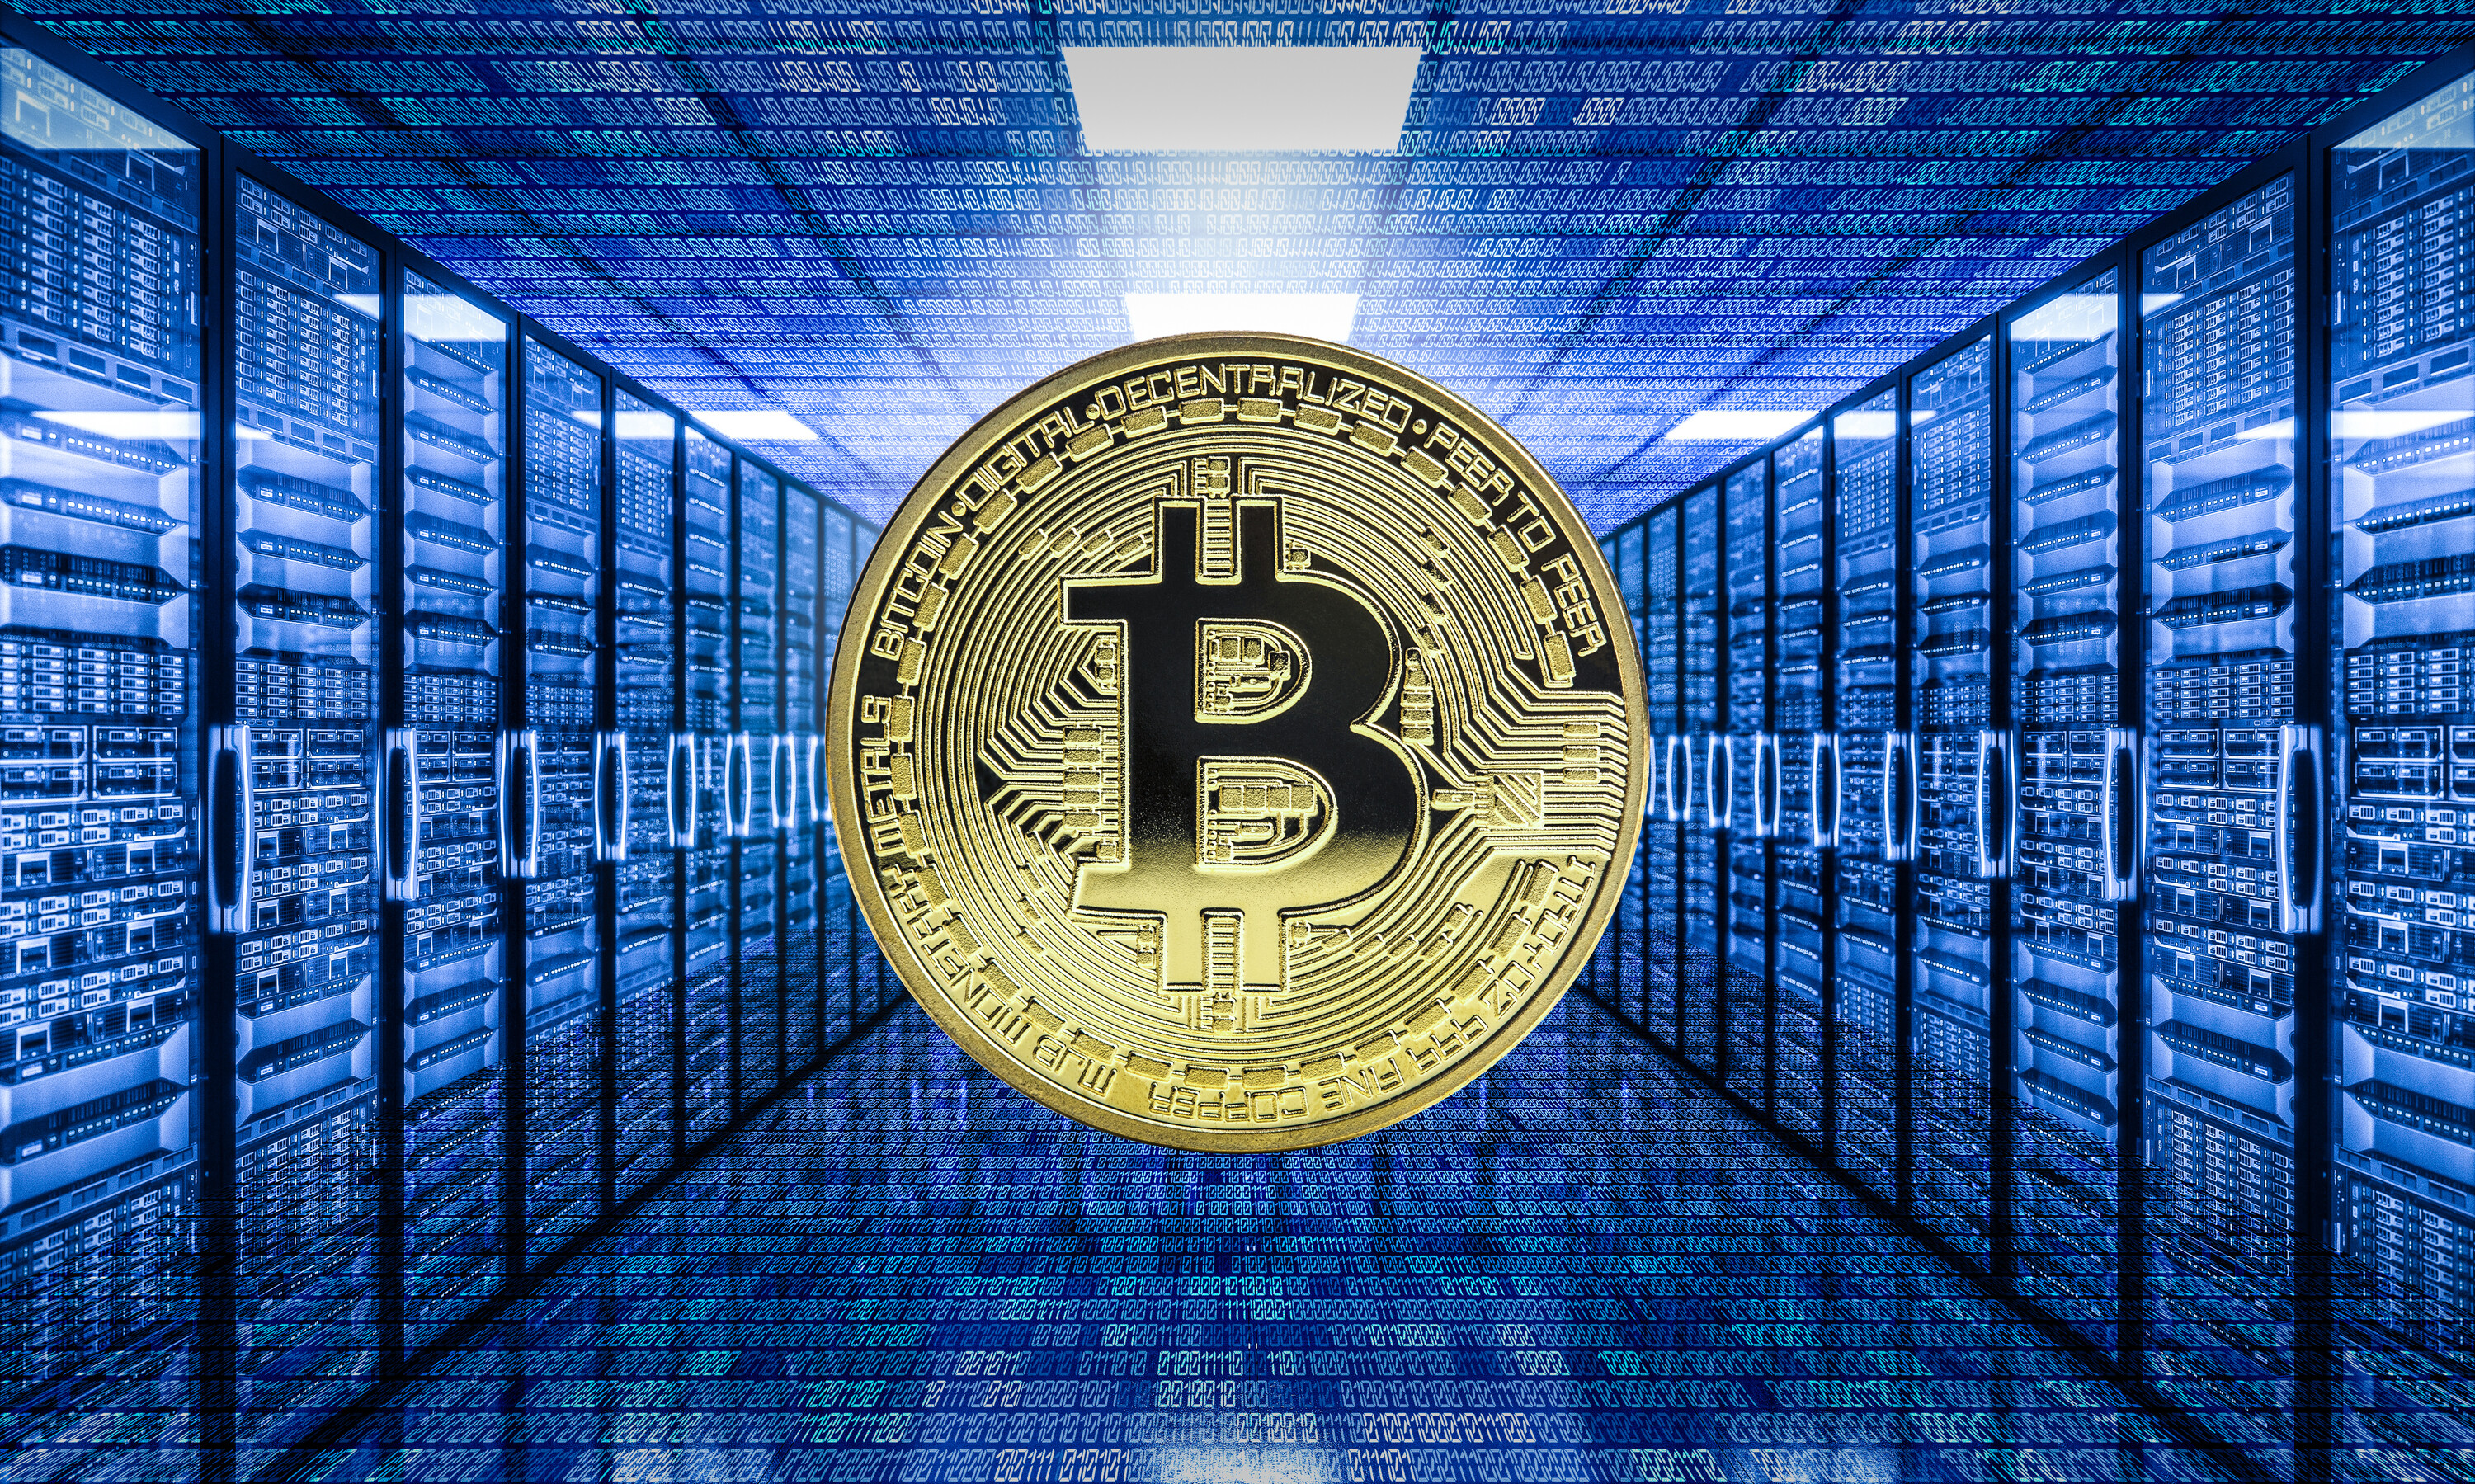 Bitkern: Your ASIC Hardware & Hosting Solution for Efficient Bitcoin Mining